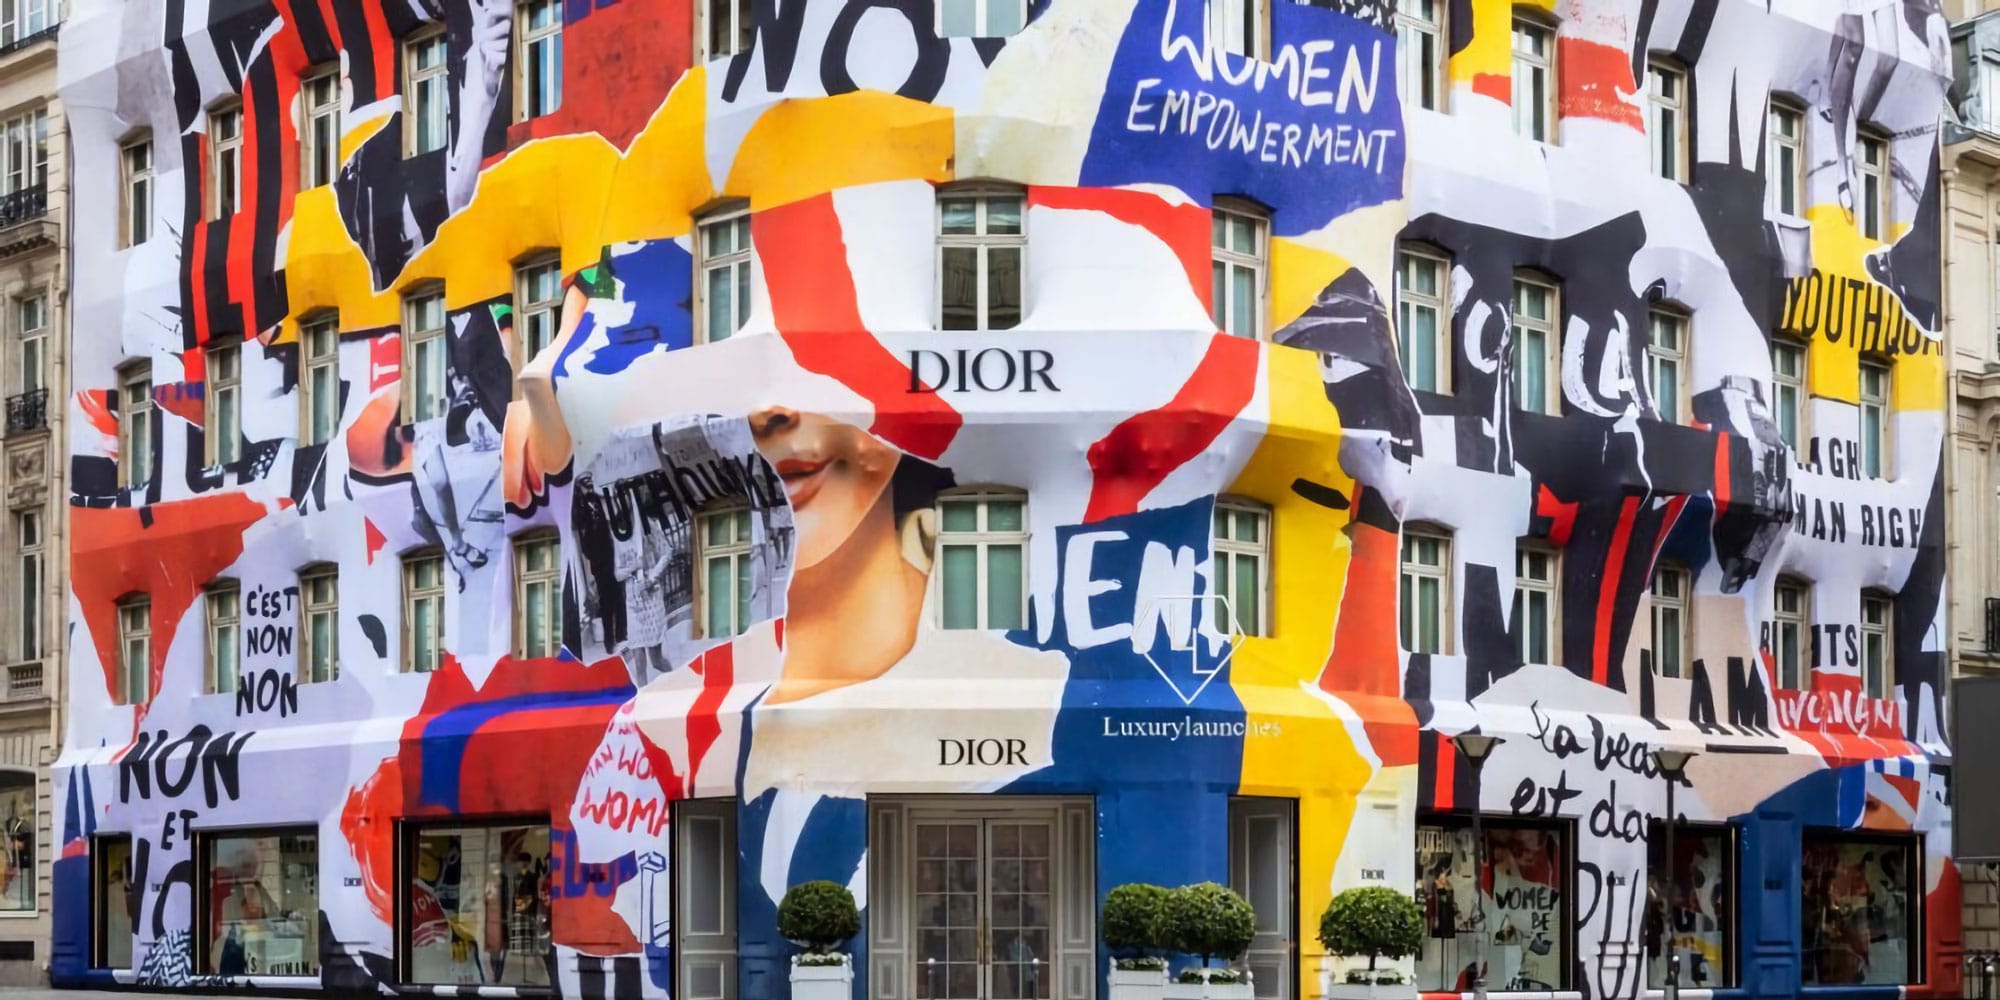 Dior avenue Montaigne women empowerment